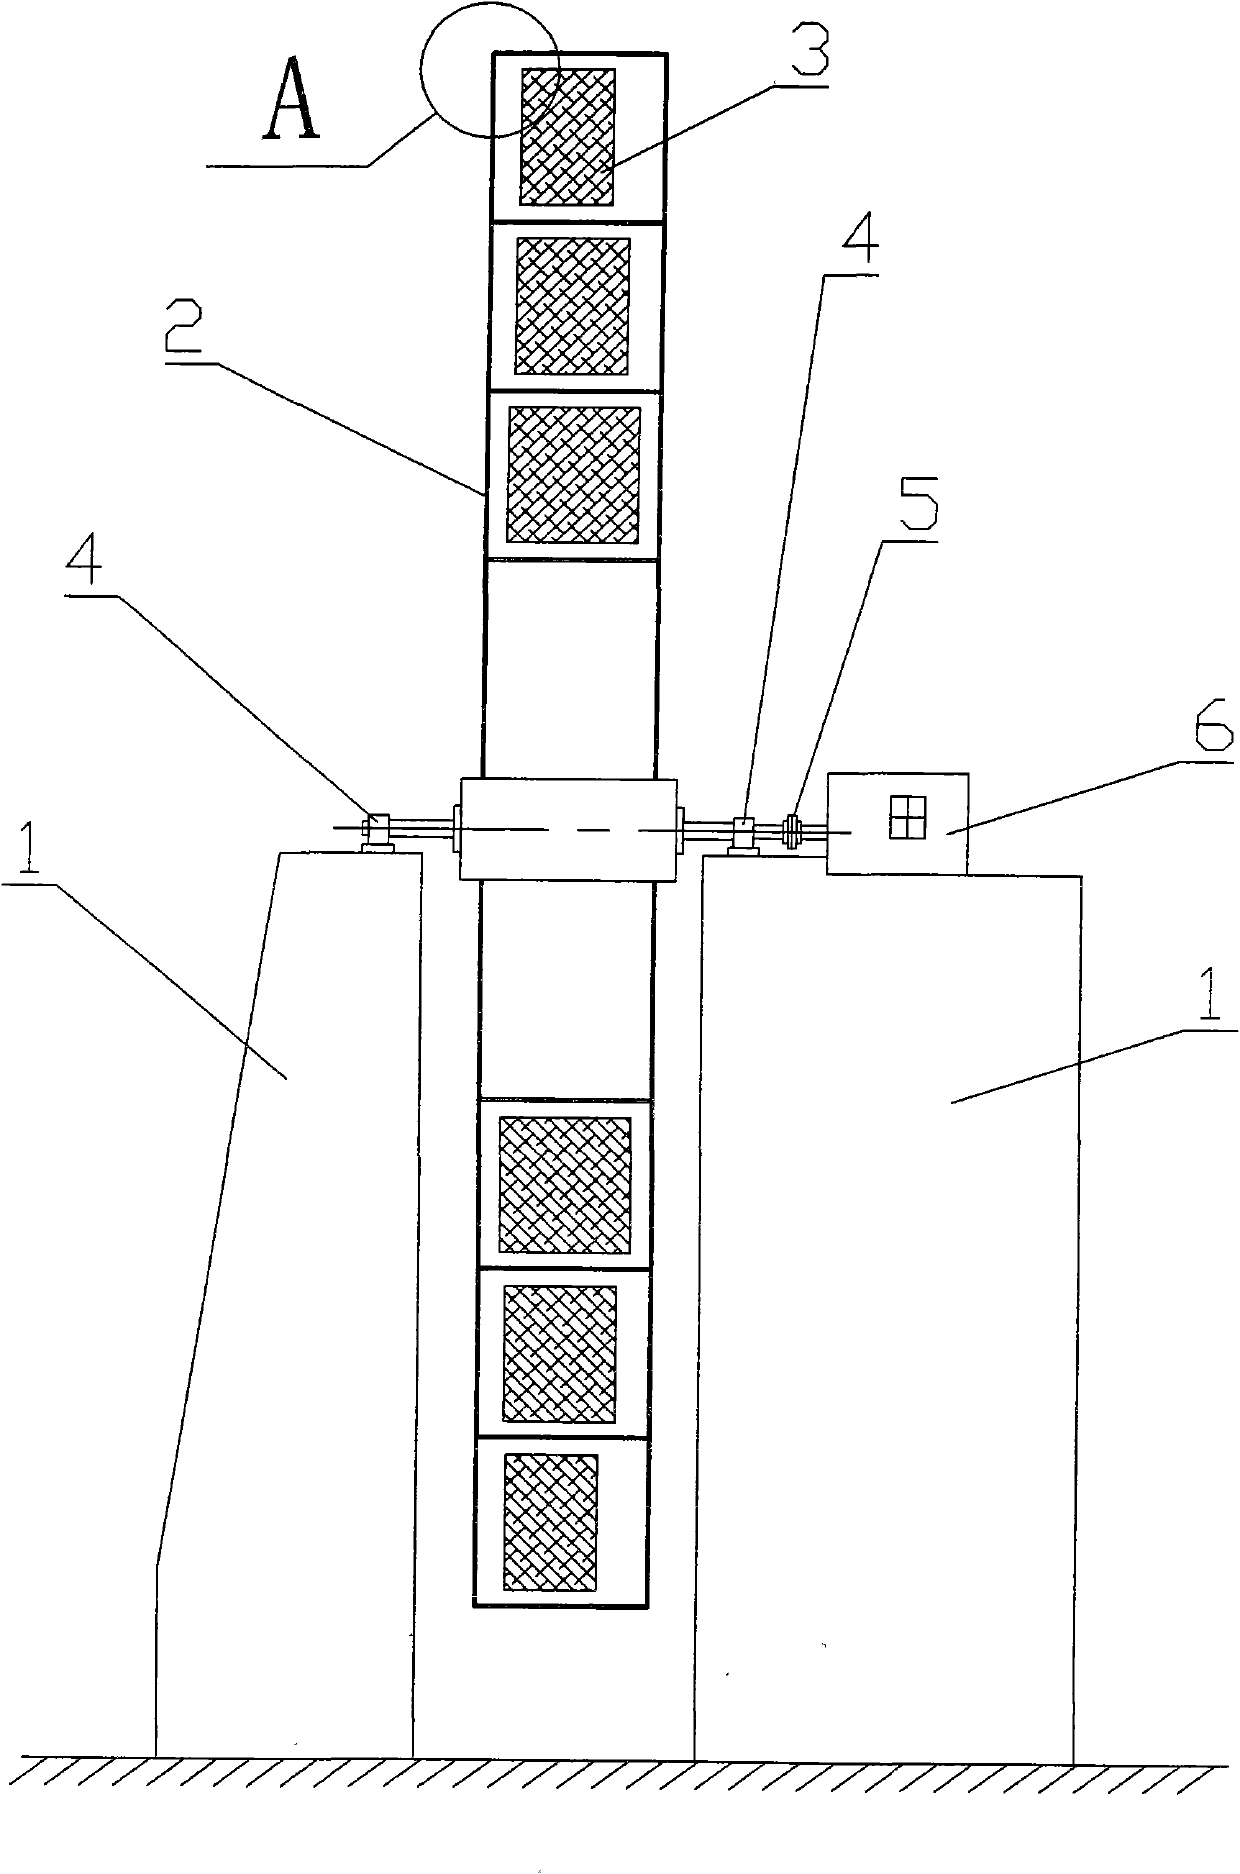 Double-column sailboard type wind turbine